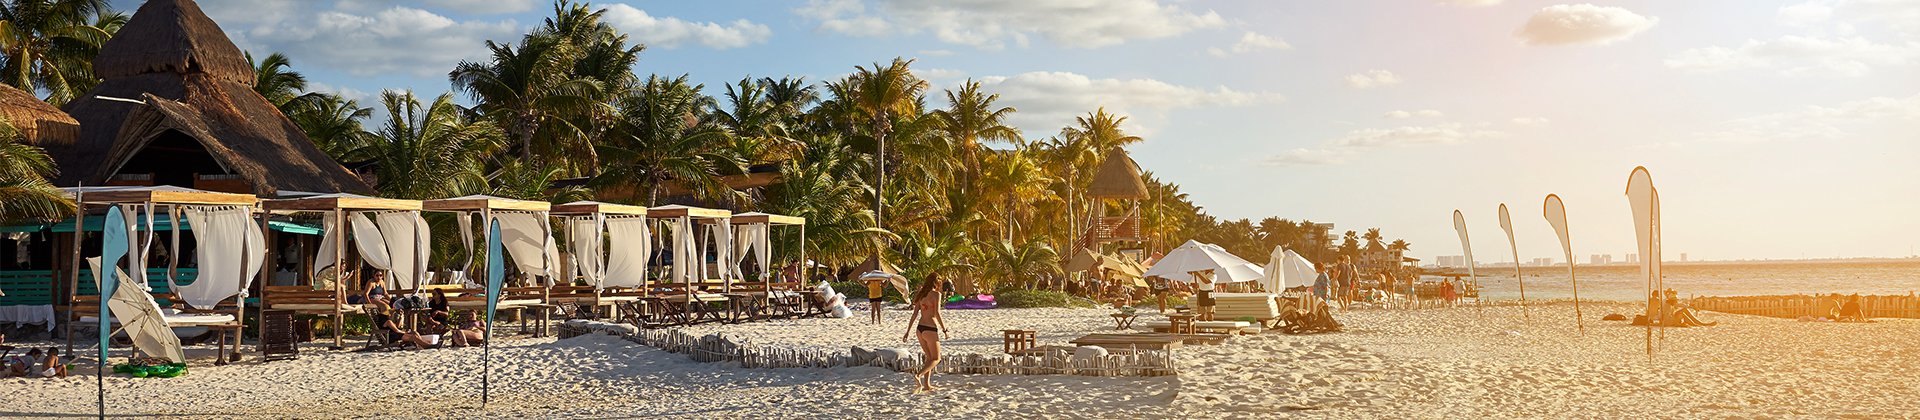 Beach cabanas on Isla Mujeres